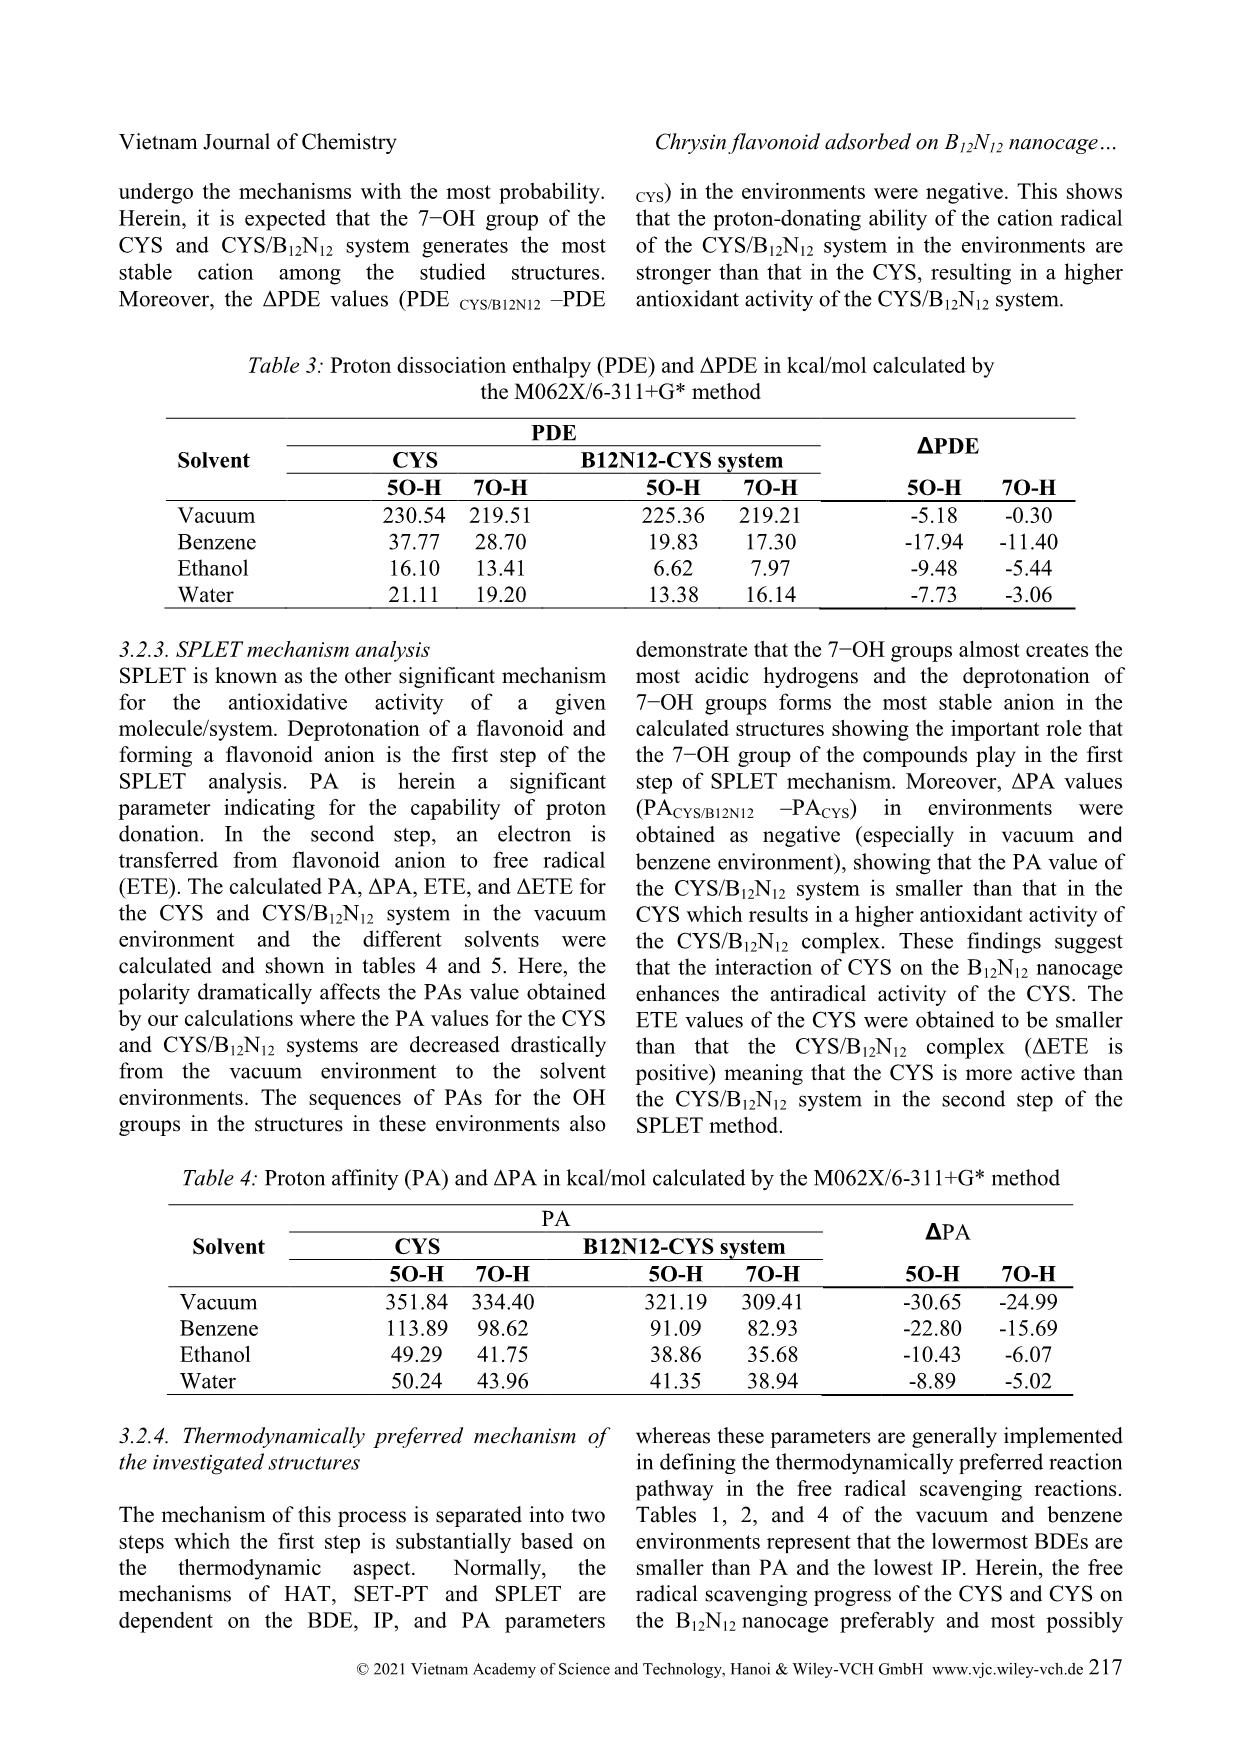 Chrysin flavonoid adsorbed on B12N12 nanocage - A novel antioxidant nanomaterial trang 7